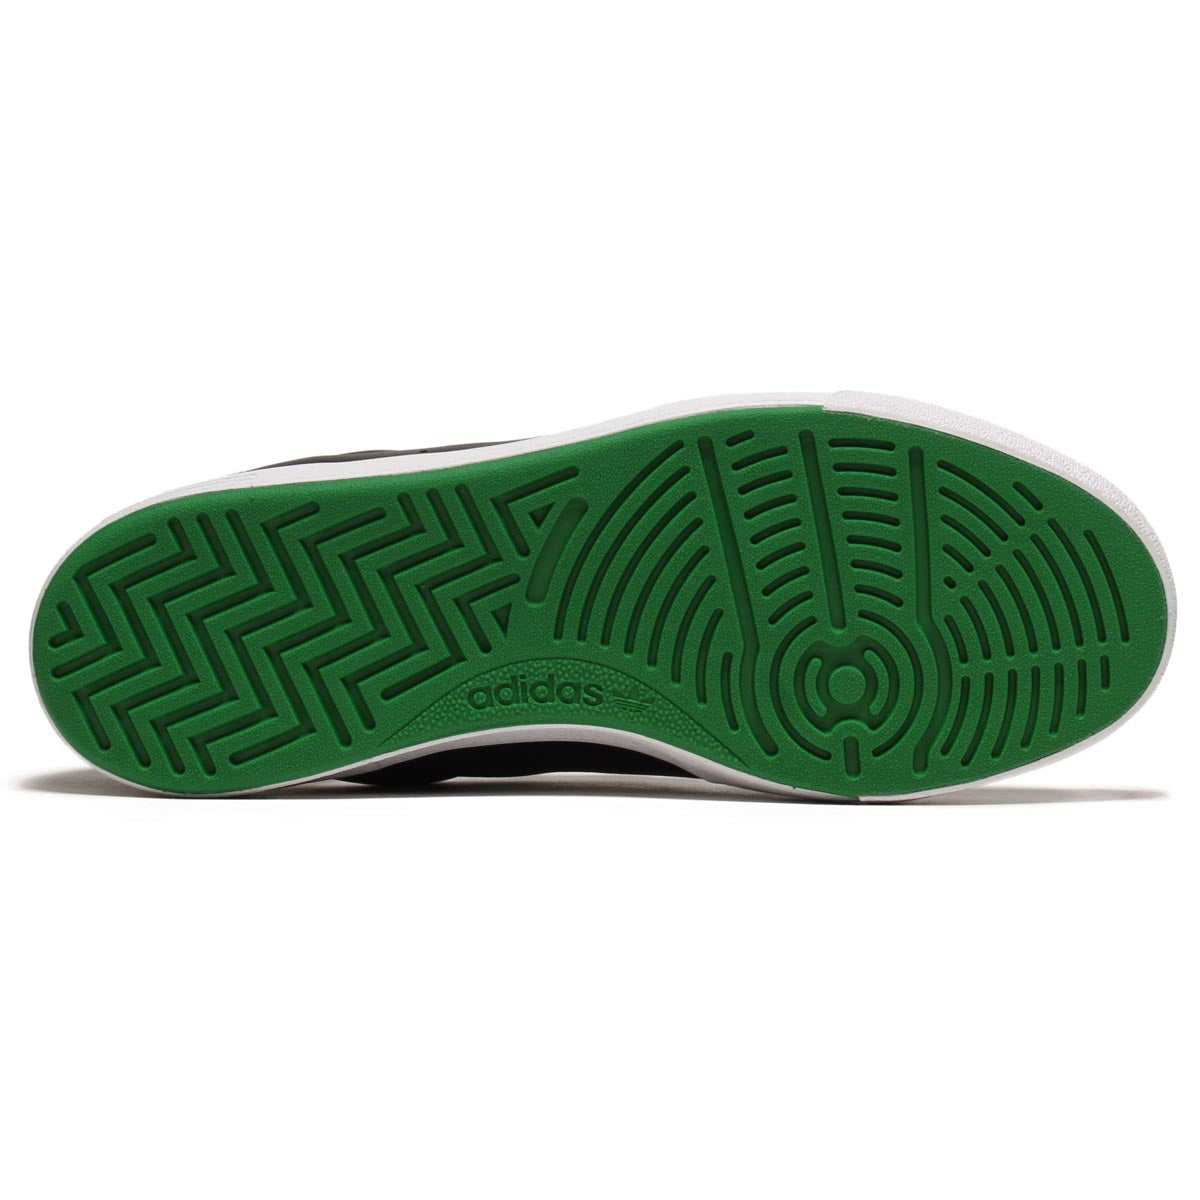 Adidas Nora Shoes - Black/Green/White image 4